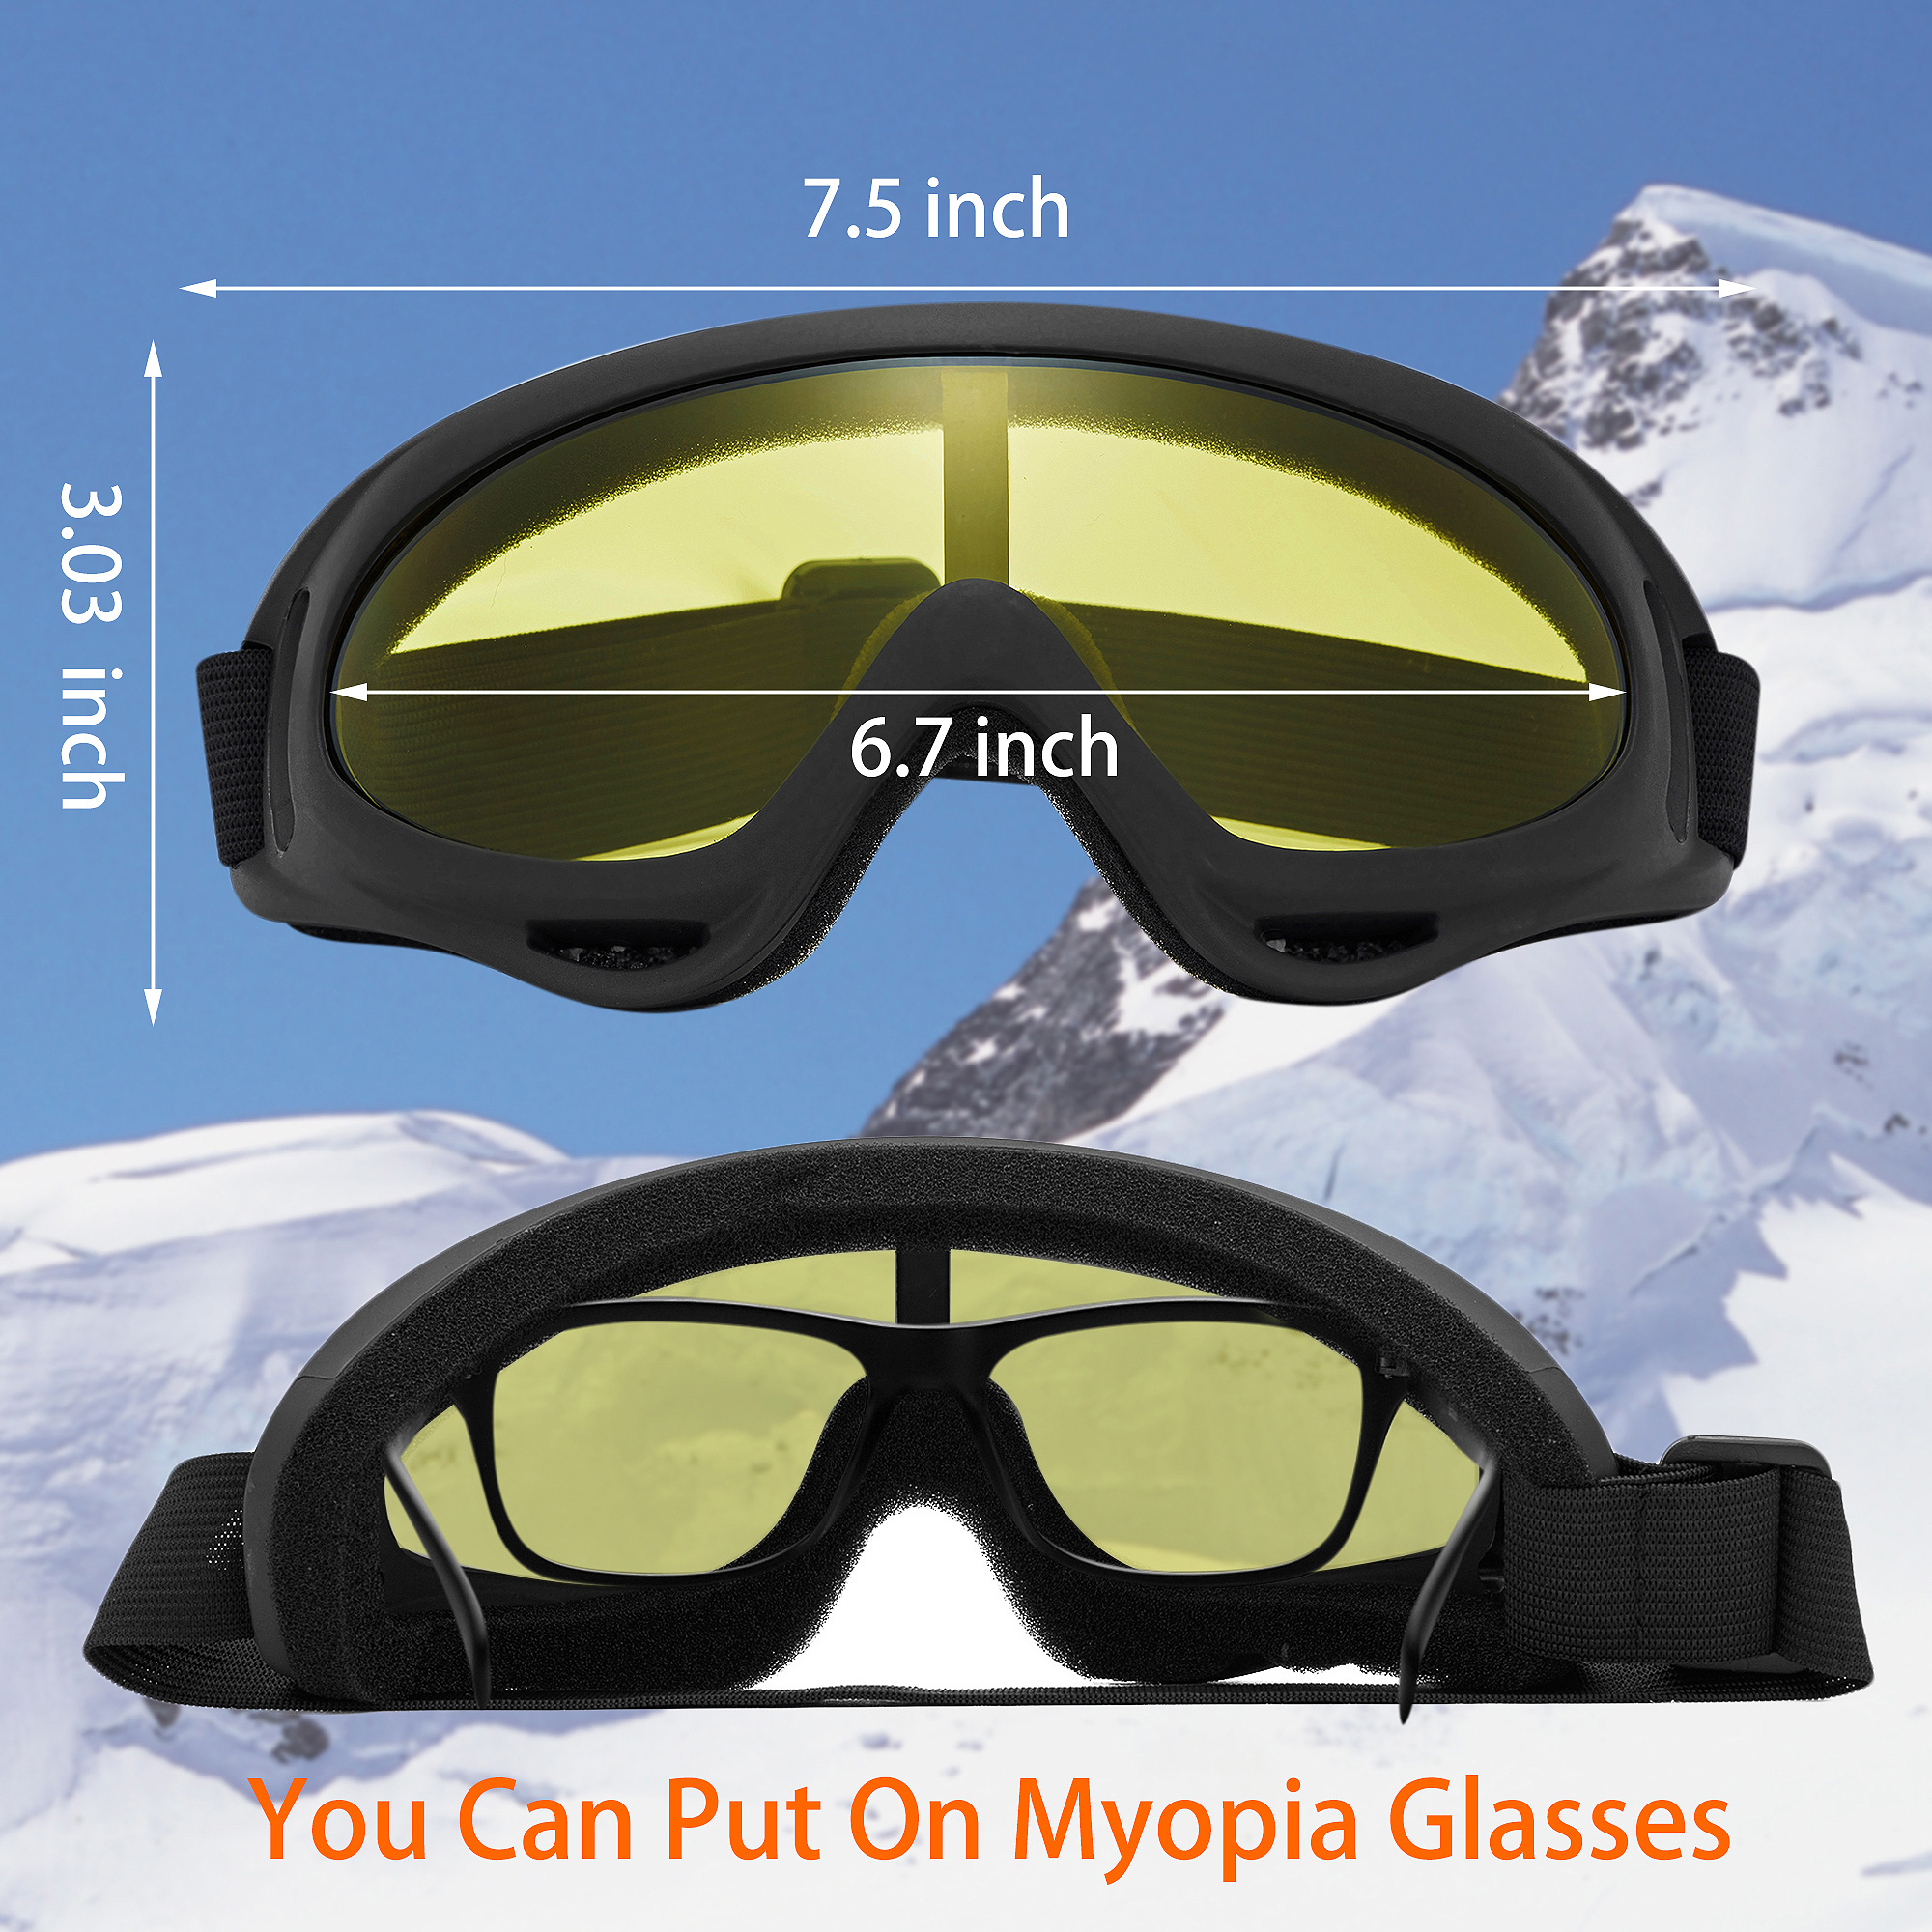 YouLoveIt Ski Goggles, 2 Pack Ski Glasses Snowboard Motobike Goggles Ski/Snowboard Goggles Motorcycle Bicycle Glasses Men Women Snow Goggles Glasses, Anti-Glare Lenses - image 3 of 8